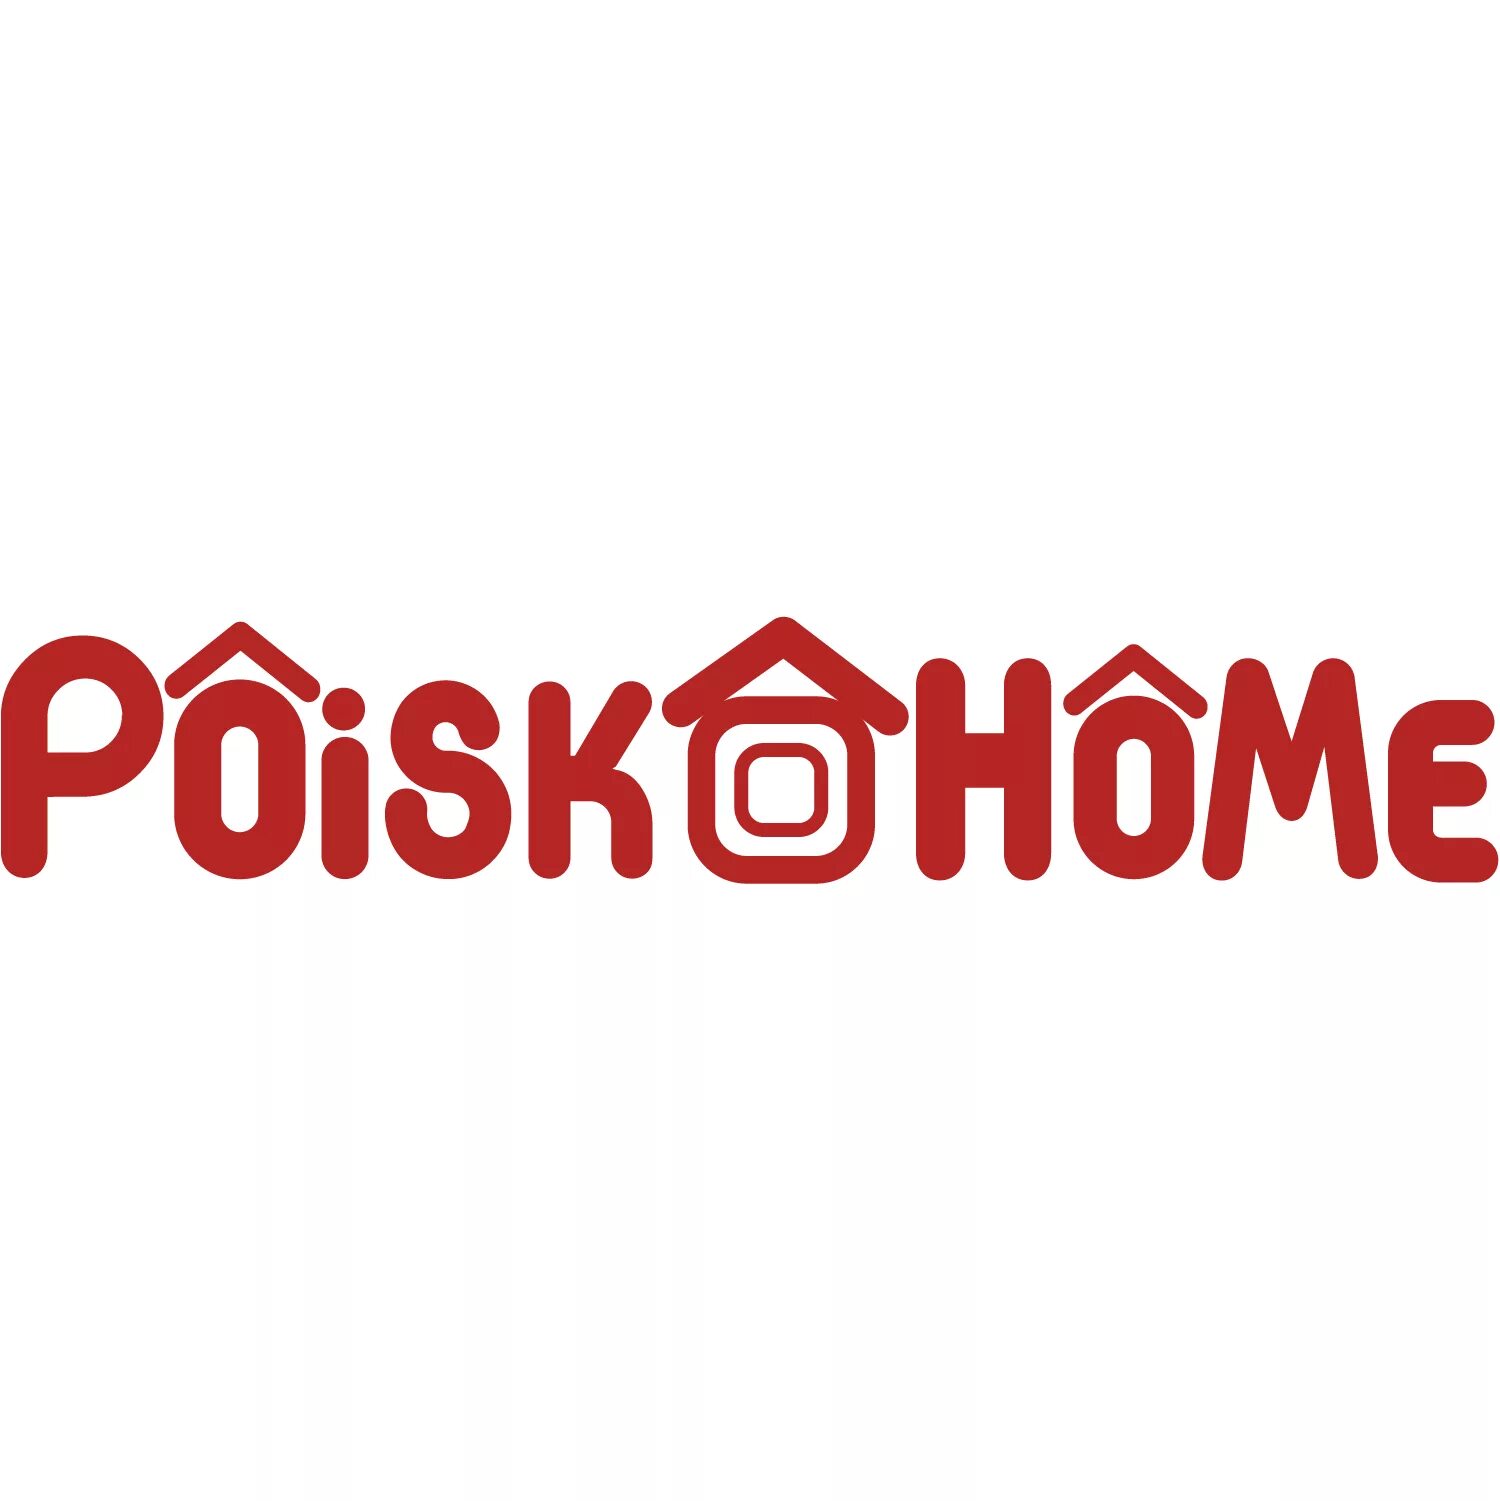 Poisk Home логотип. Логотип поиск магазин. Логотип поисковика магазинов. Логотип найти товар.